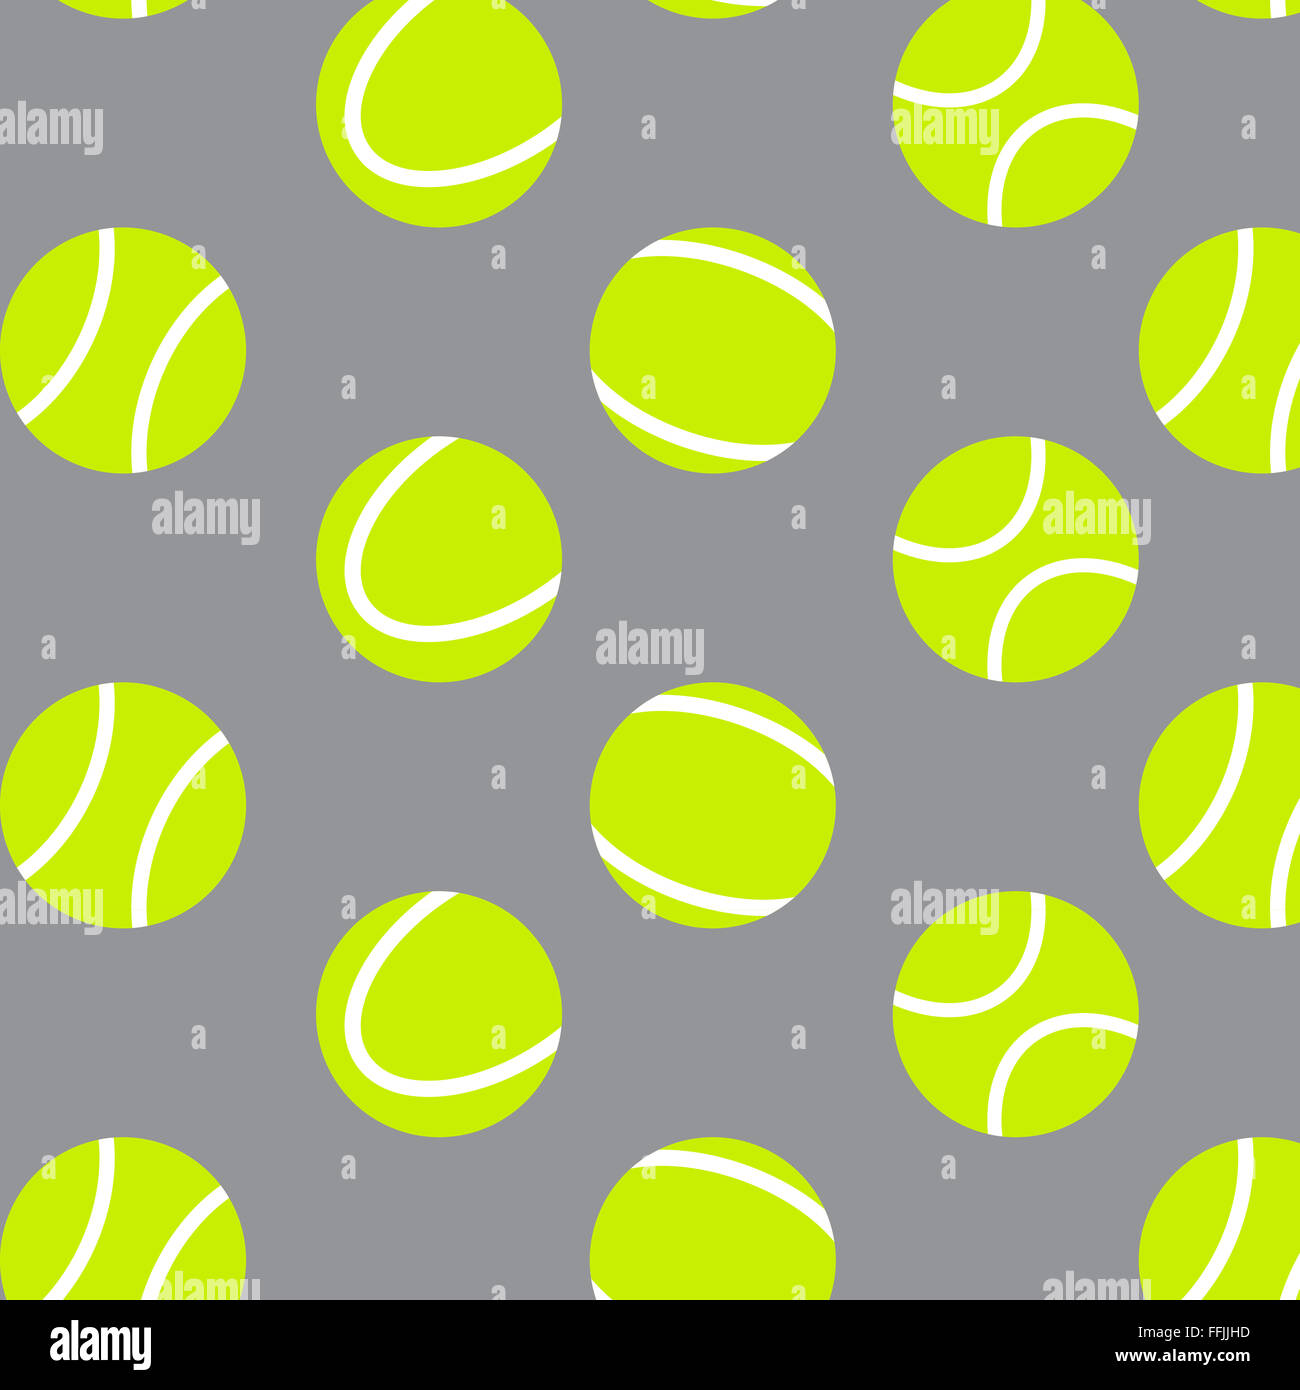 Tennis ball seamless pattern background. Tennis sport seamless pattern, ball repetition. Vector abstract flat design illustratio Stock Photo